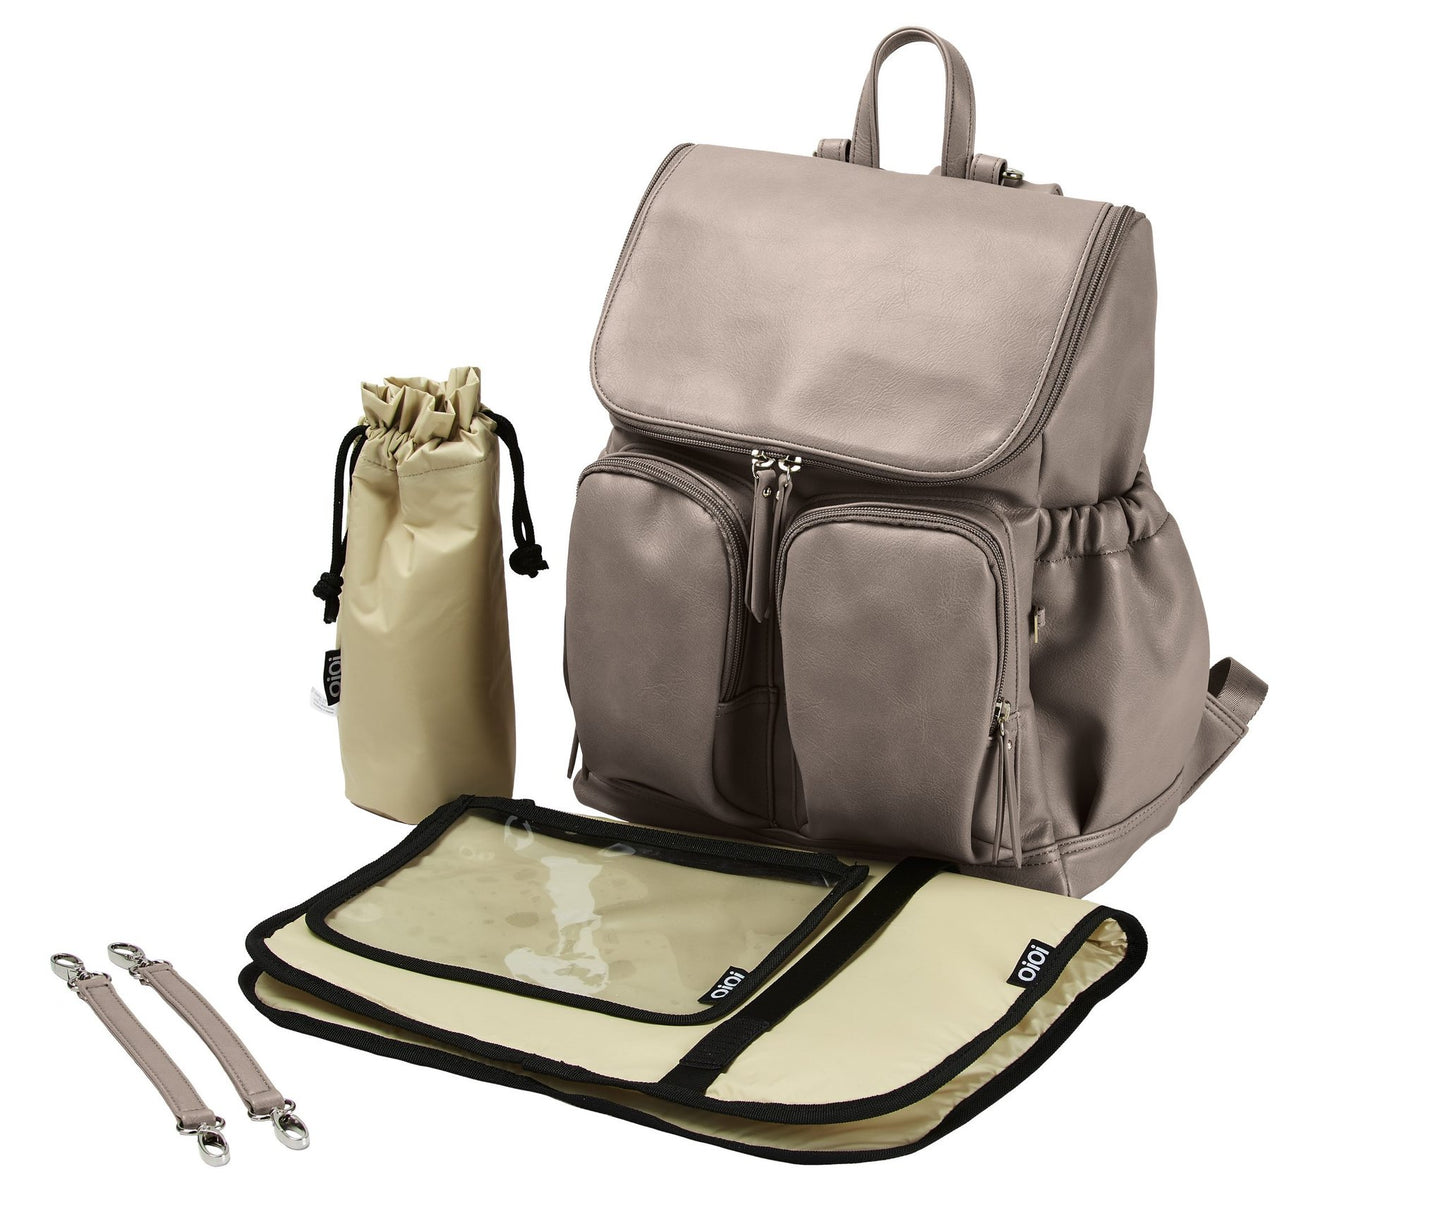 Signature Nappy Backpack - Olive Vegan Leather